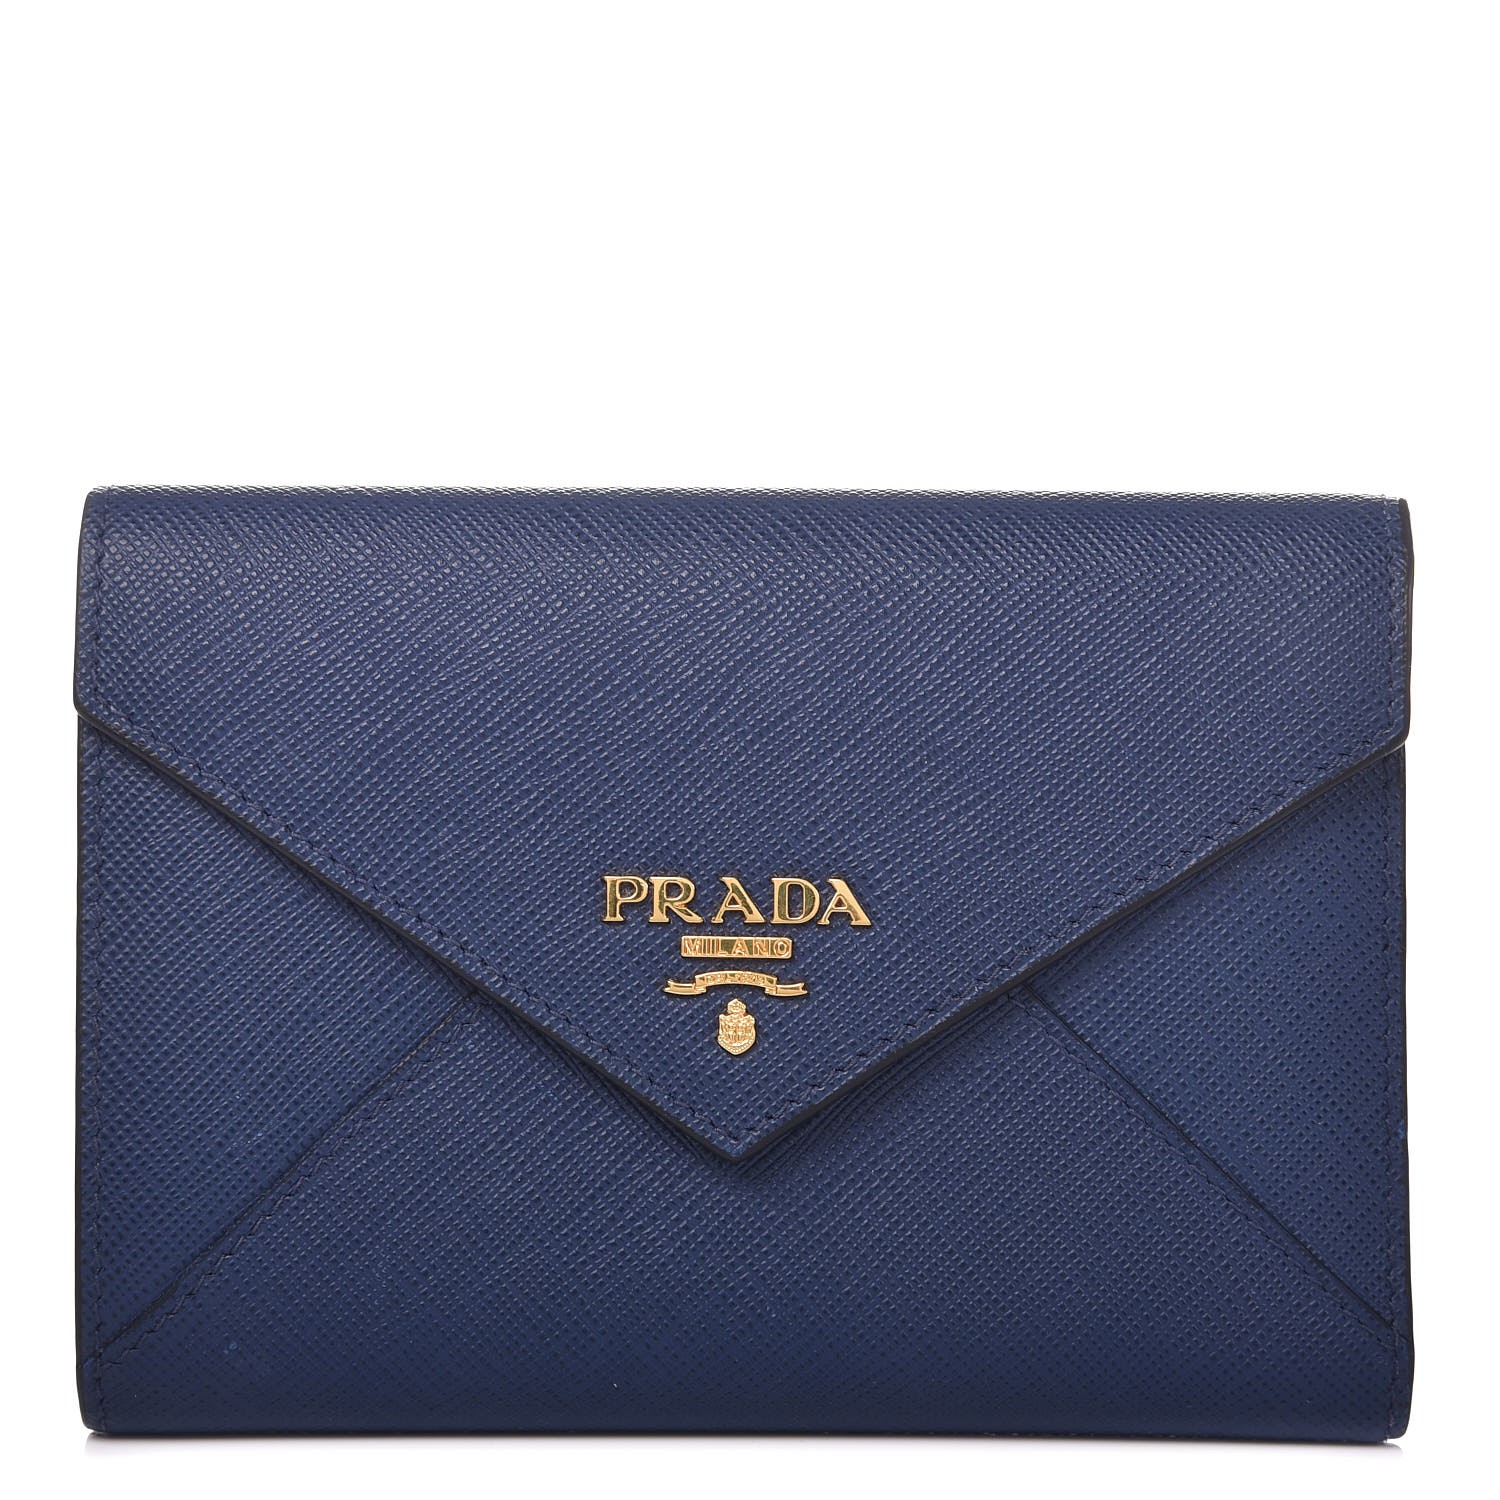 PRADA Saffiano Compact Envelope Wallet Bluette 328009 | FASHIONPHILE